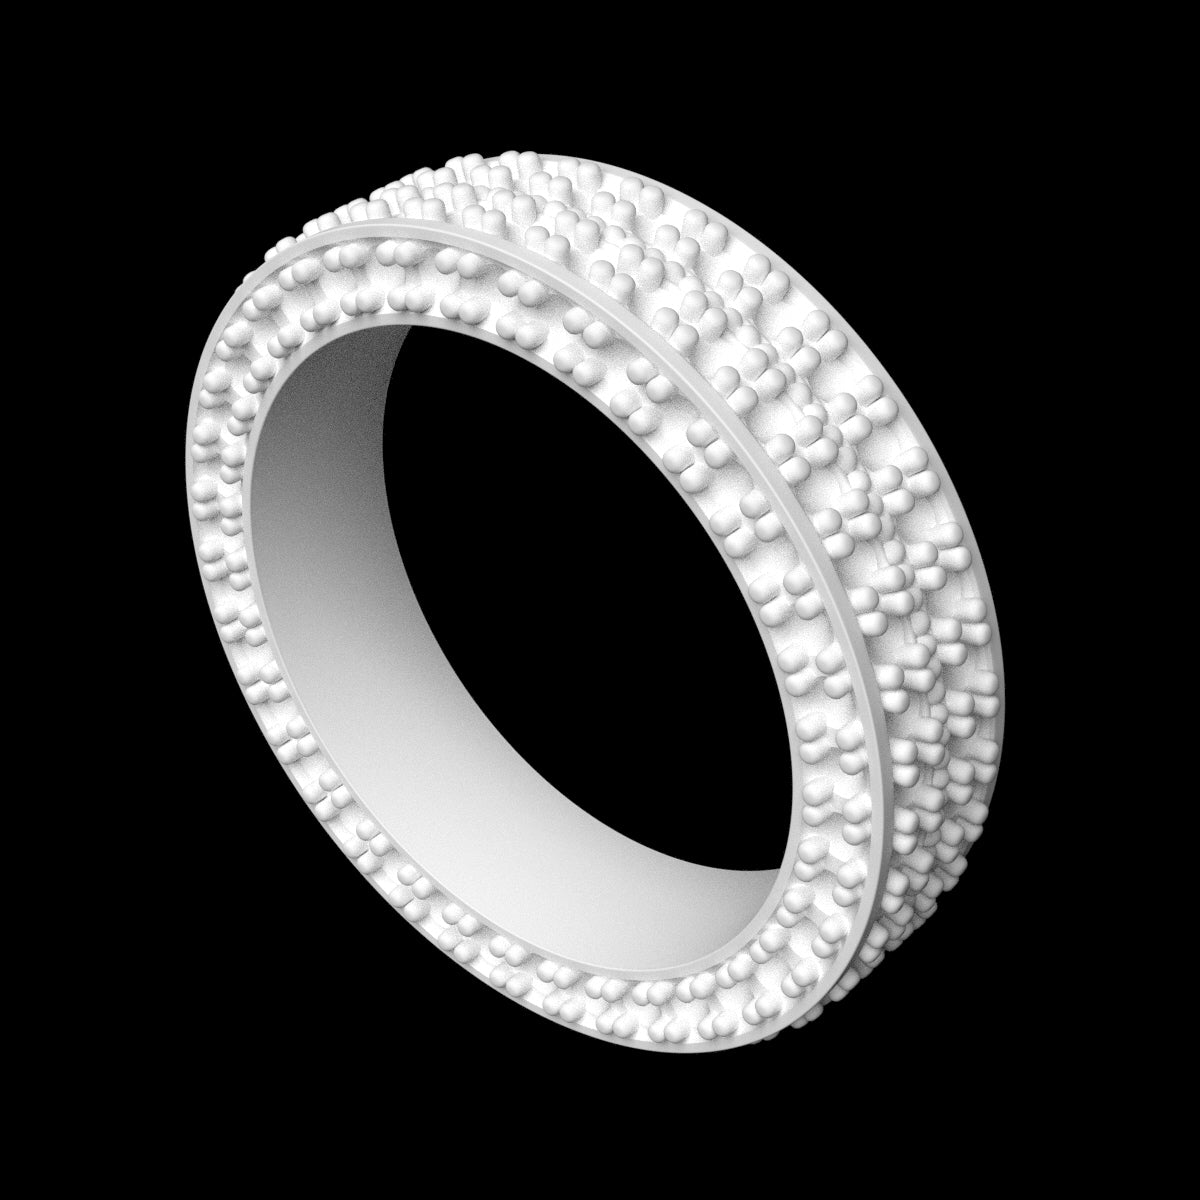 Wedding Set Ring Women Men Ring CAD Design-PSJM001V13